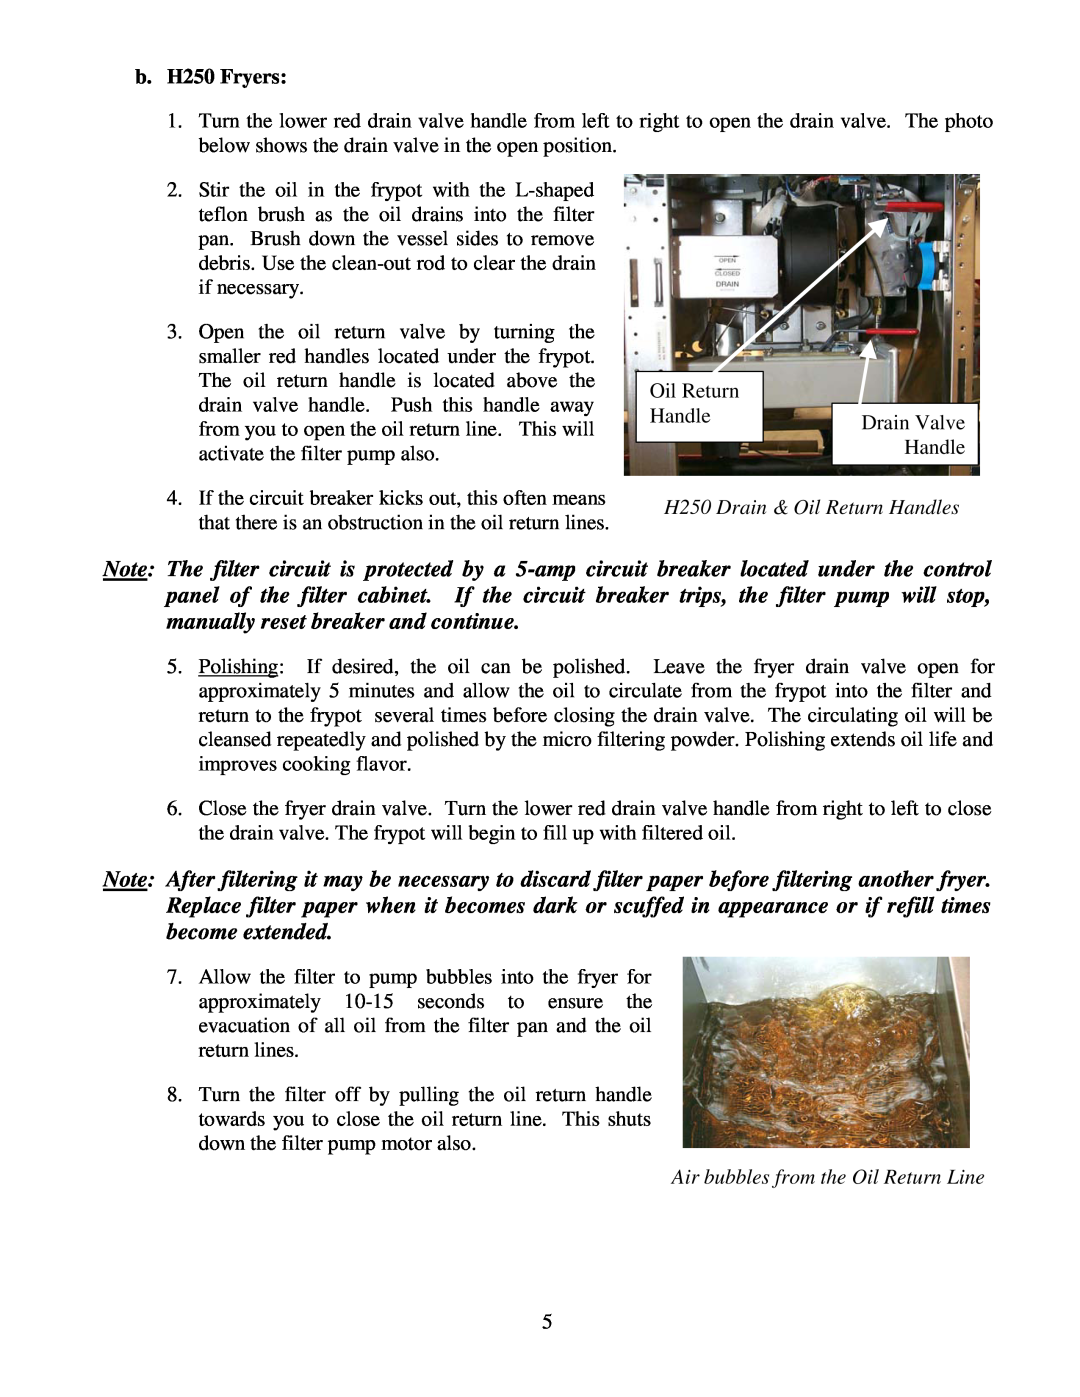 Frymaster CE operation manual b. H250 Fryers 